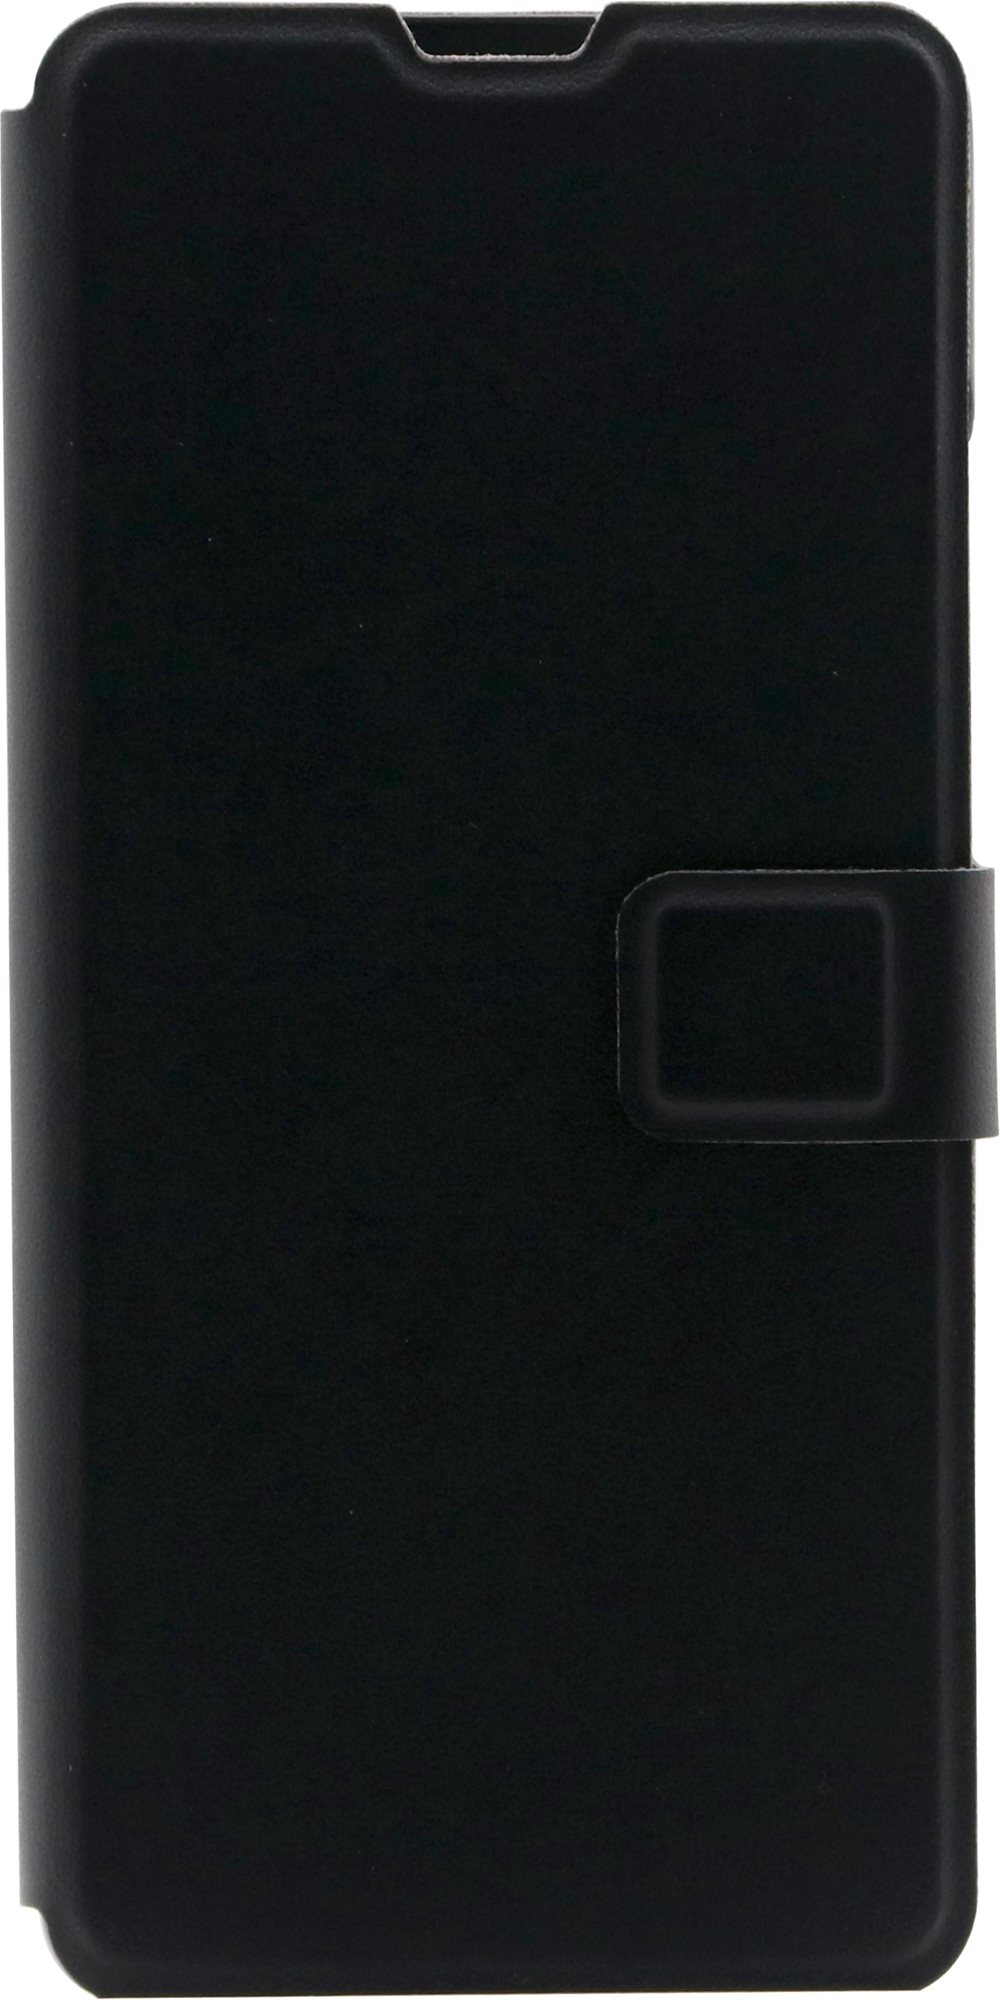 Mobiltelefon tok iWill Book PU Leather POCO X3 Pro fekete tok